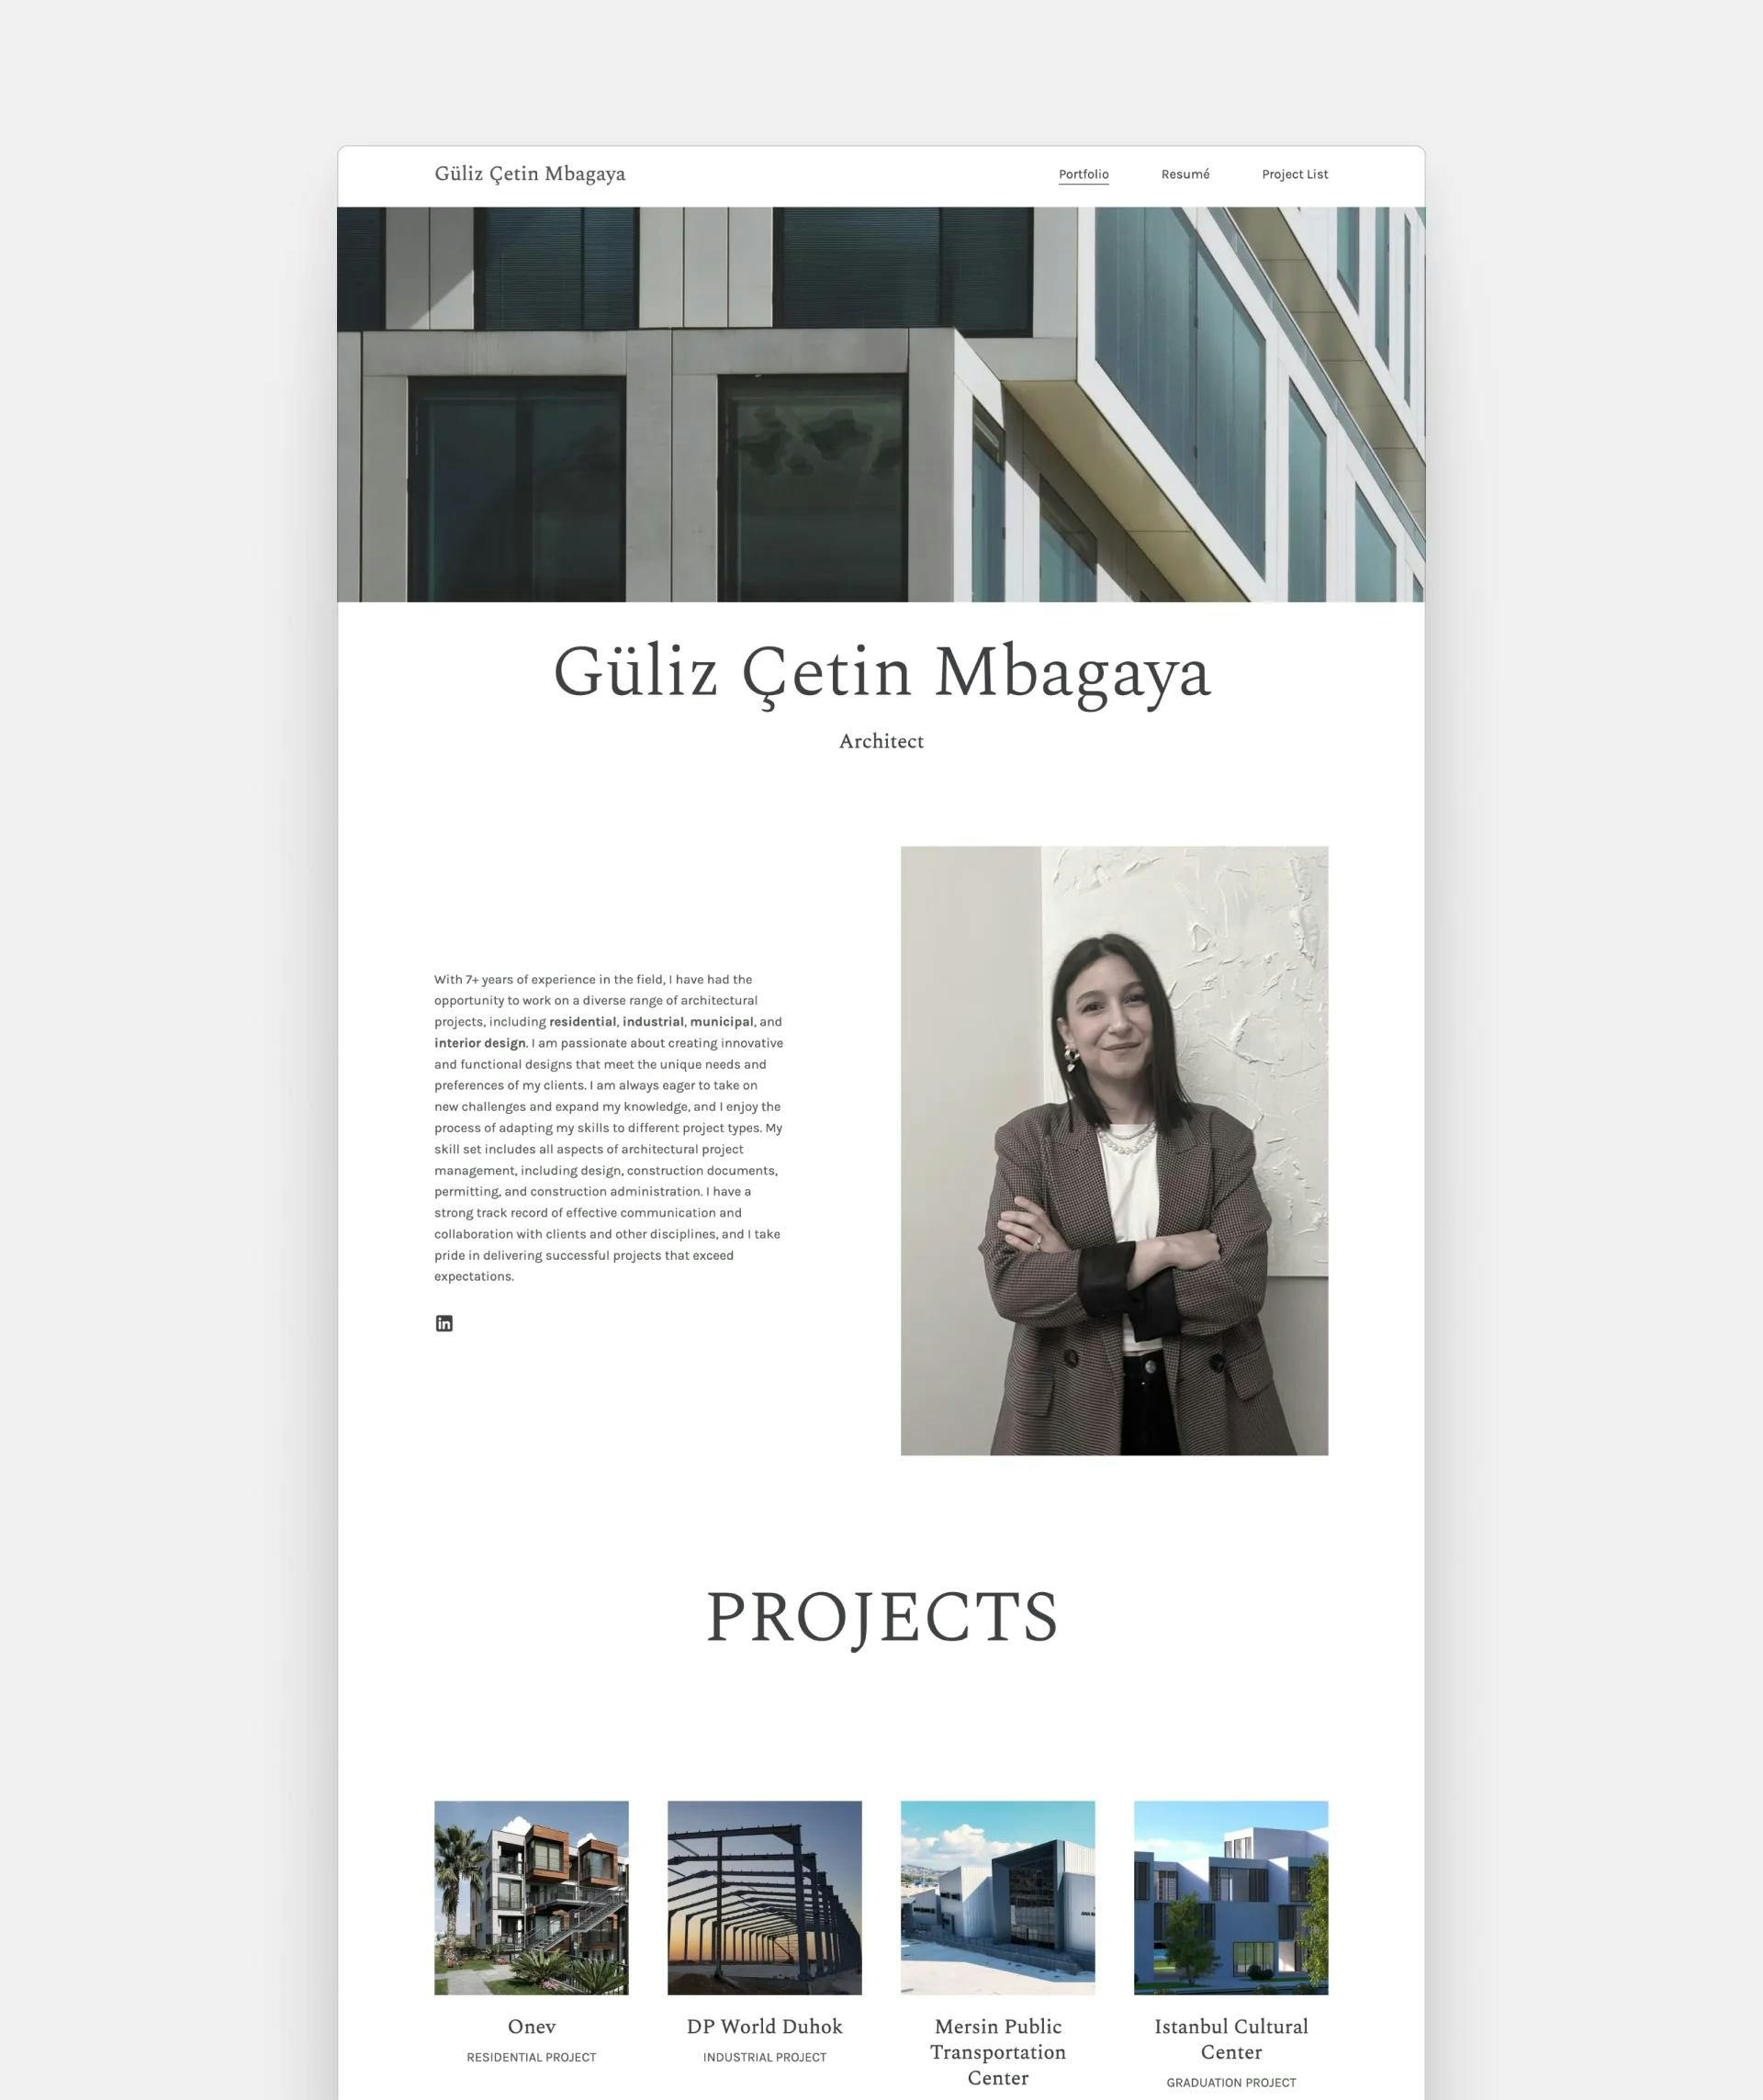 Screenshot Güliz Çetin Mbagaya's portfolio with a professional profile image and an impressive hero cover